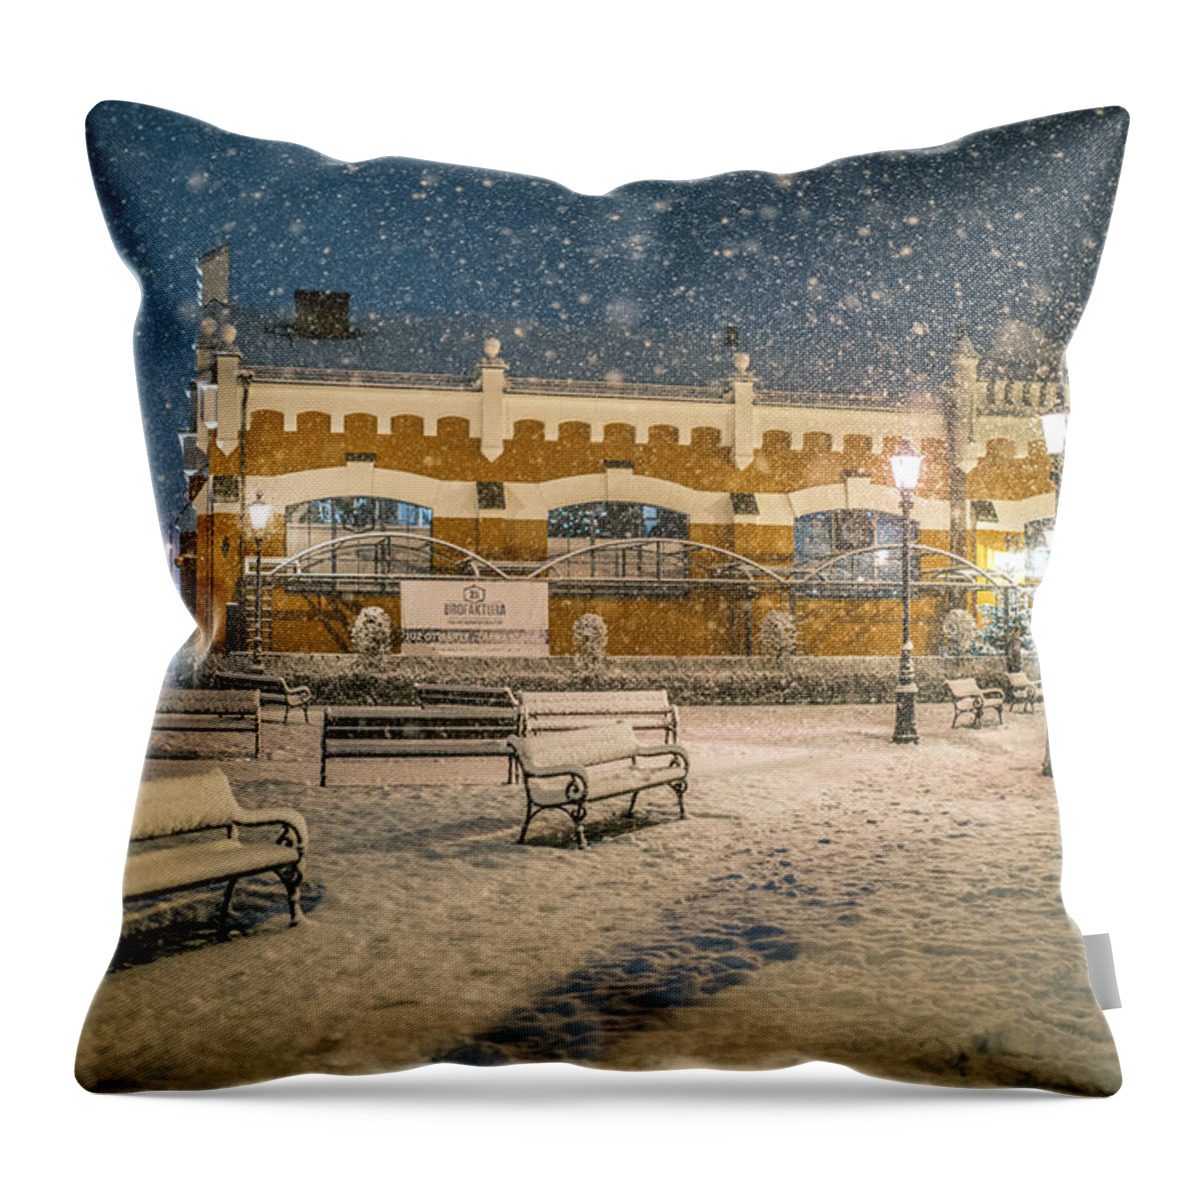 Winter Throw Pillow featuring the photograph Blizzard by Jaroslaw Grudzinski